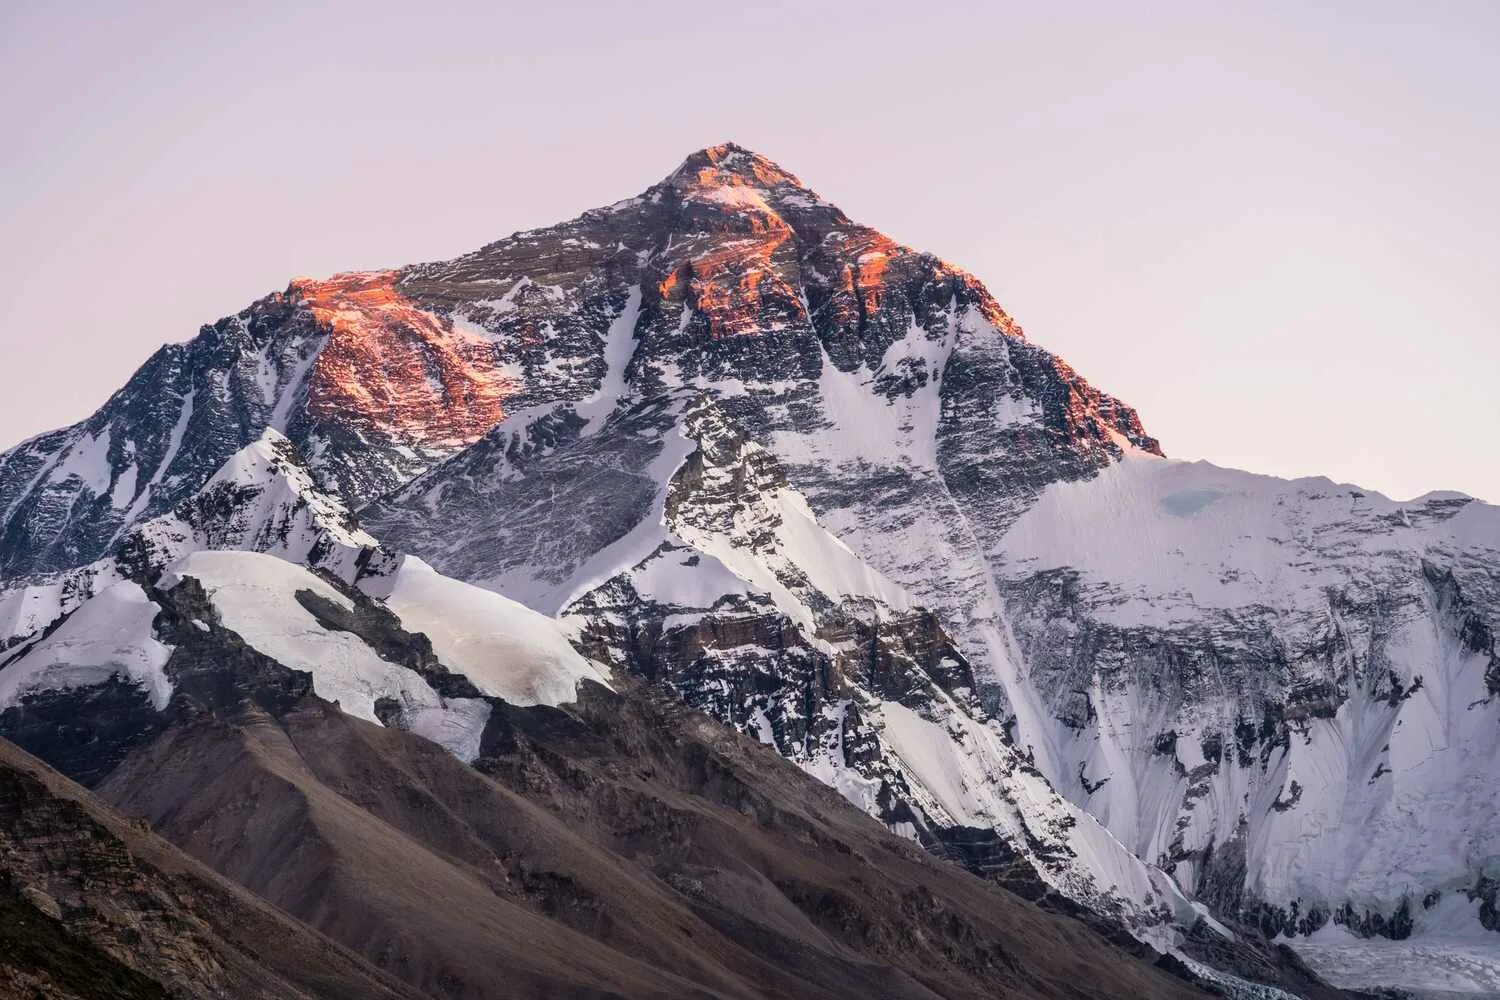 Mount everest is high in the world. Эверест, Непал/Тибет. «Сагарматха» = Эверест = Джомолунгма). Вид на Эверест из Катманду. Северная стена Эвереста.